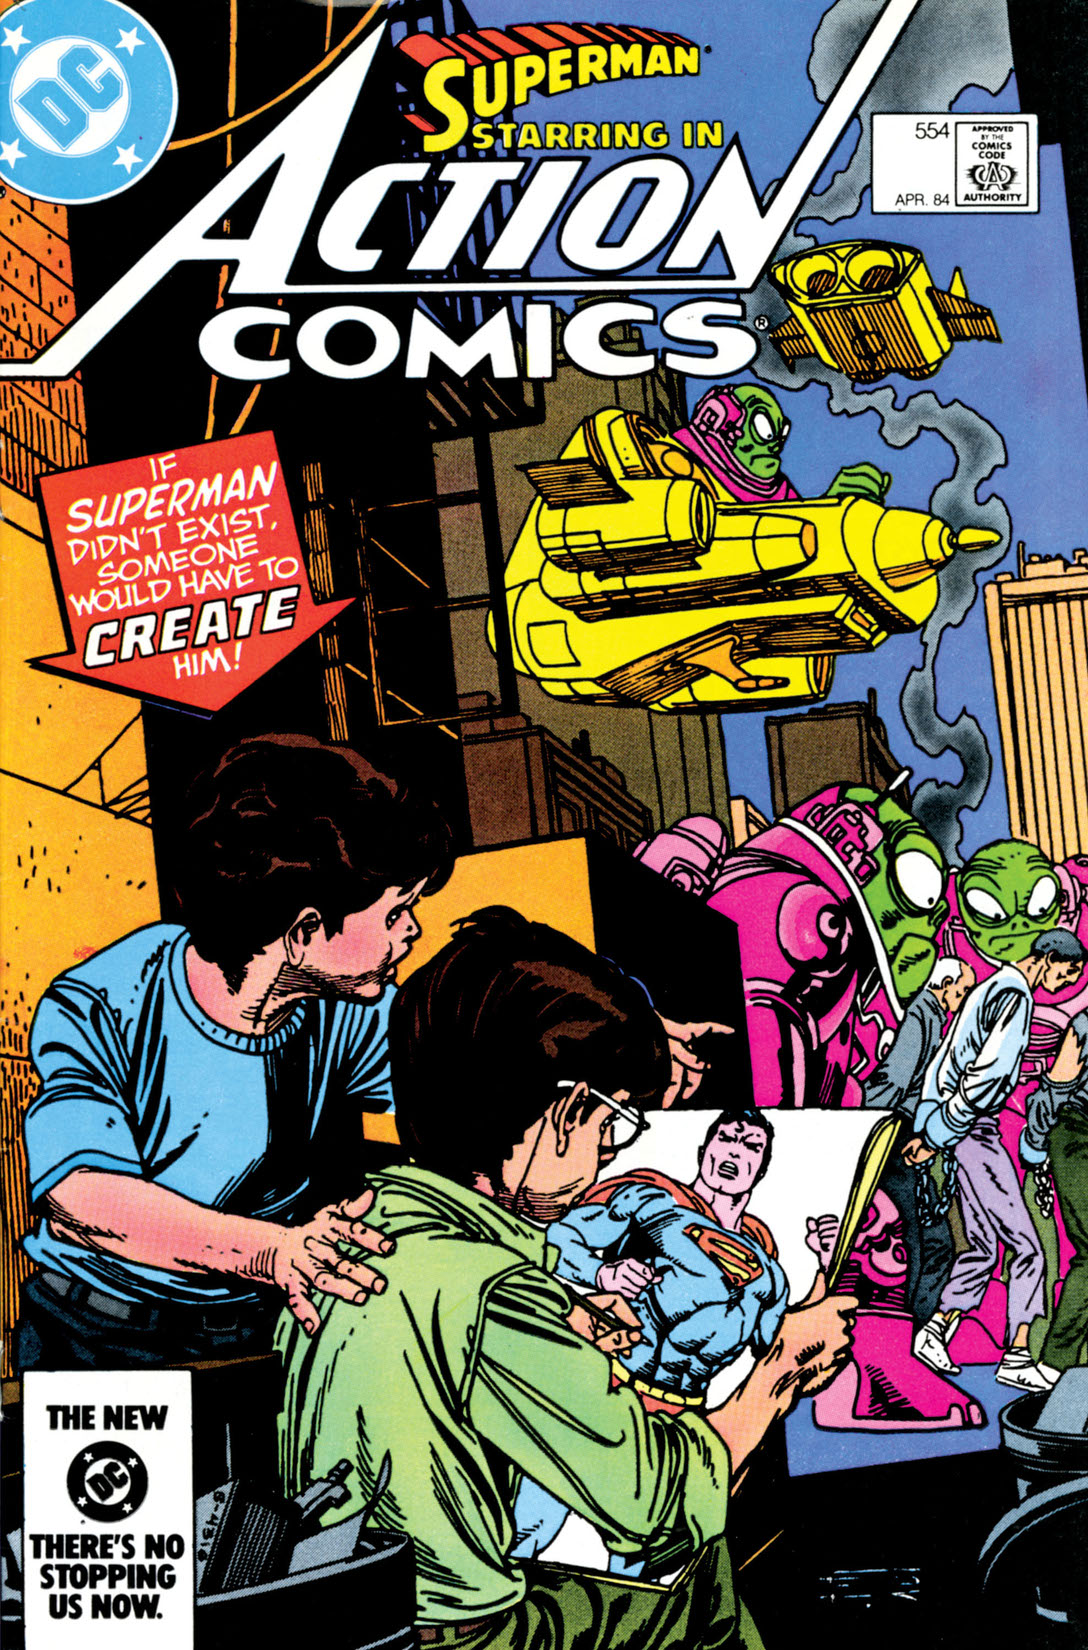 Action Comics (1938-) #554 preview images